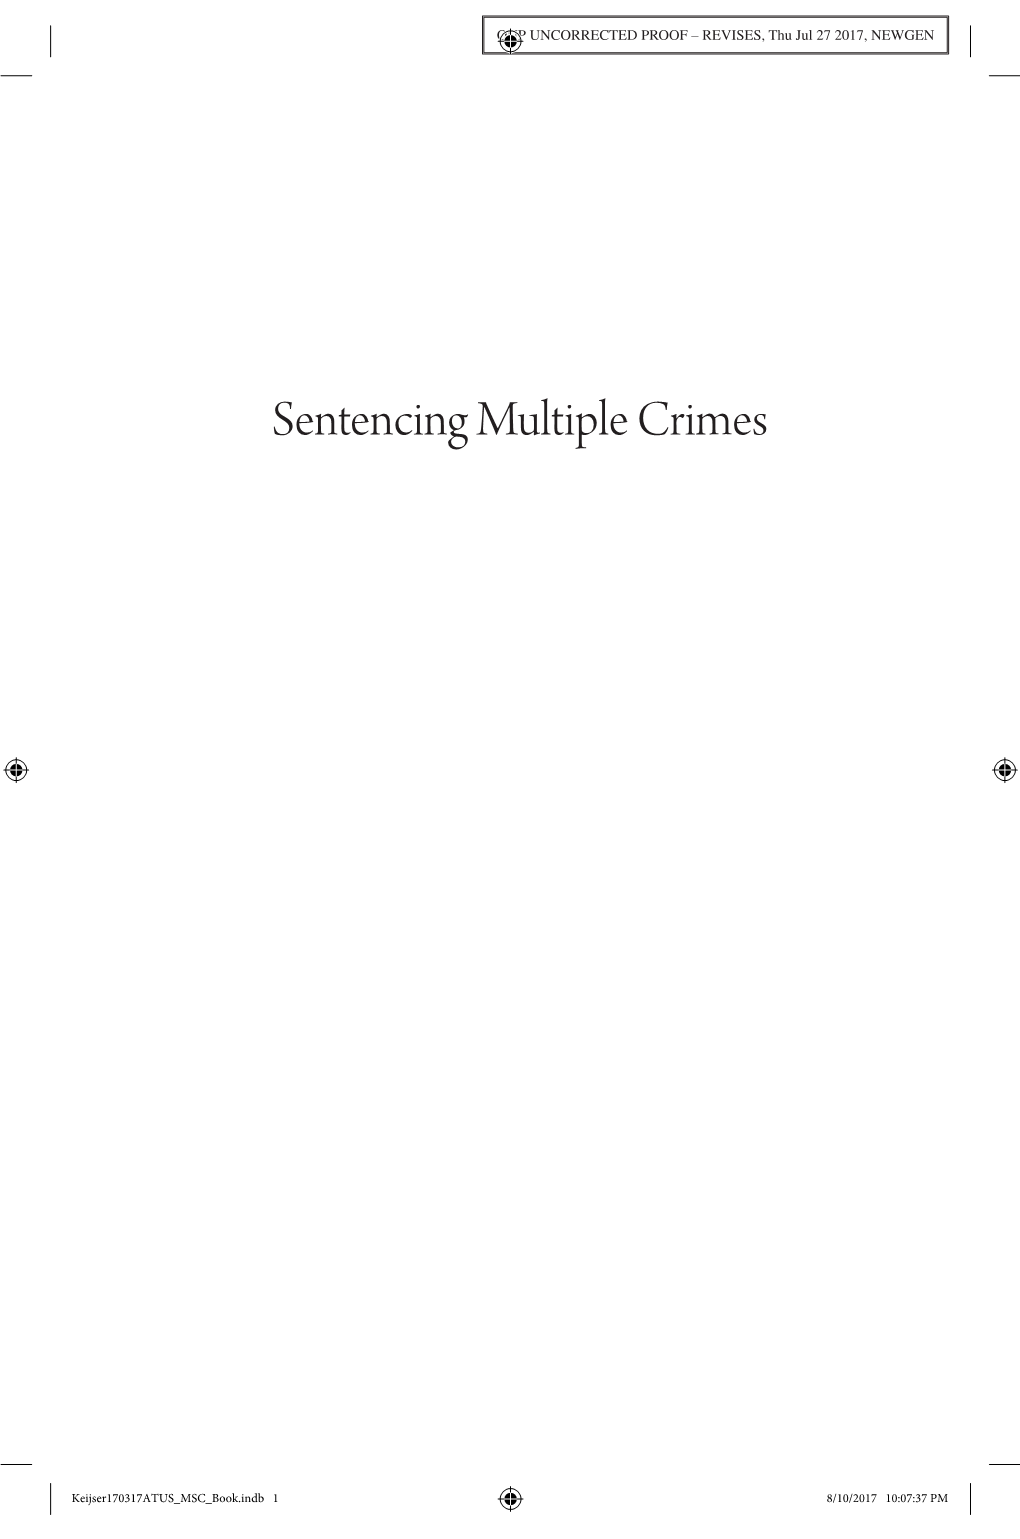 Sentencing Multiple Crimes